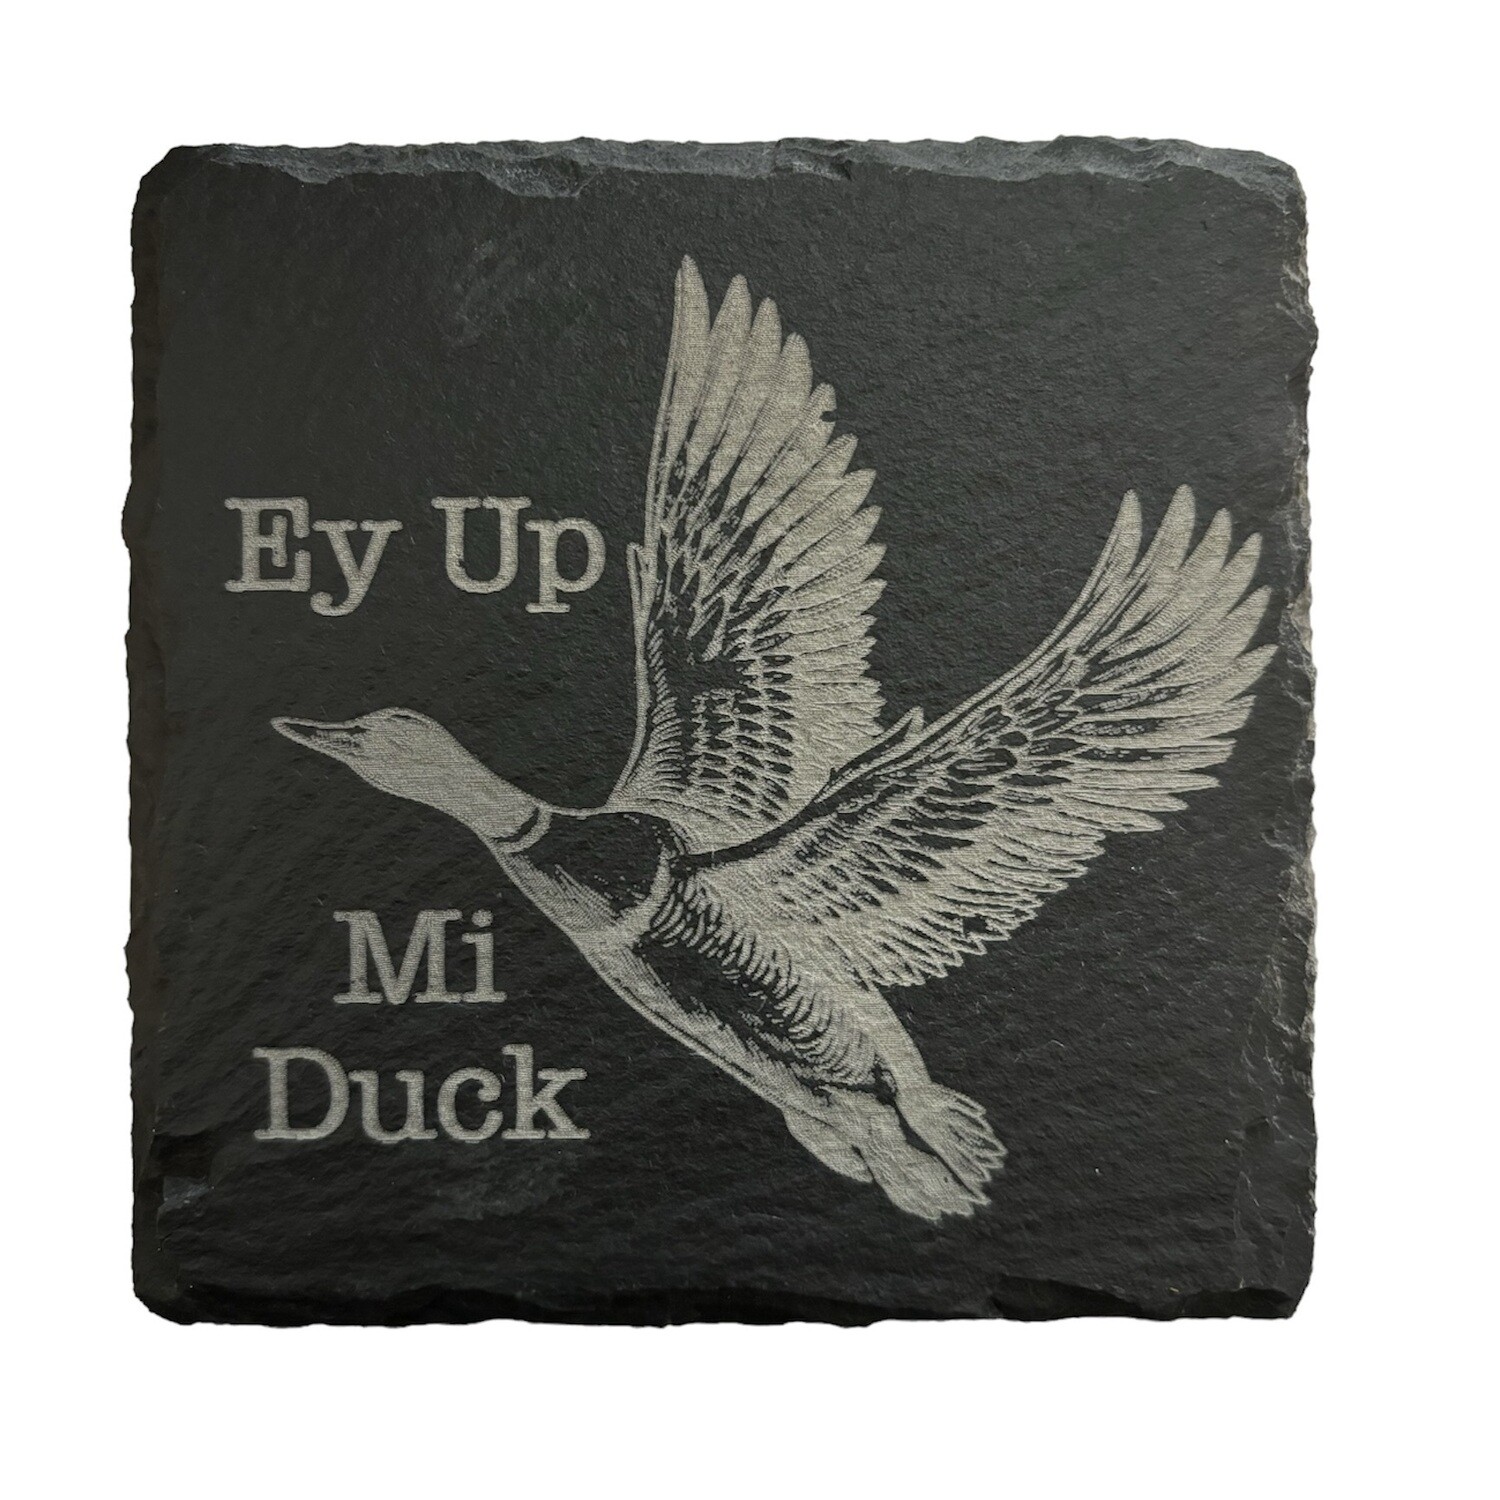 Ey up Mi Duck / Ey up Ducki Slates